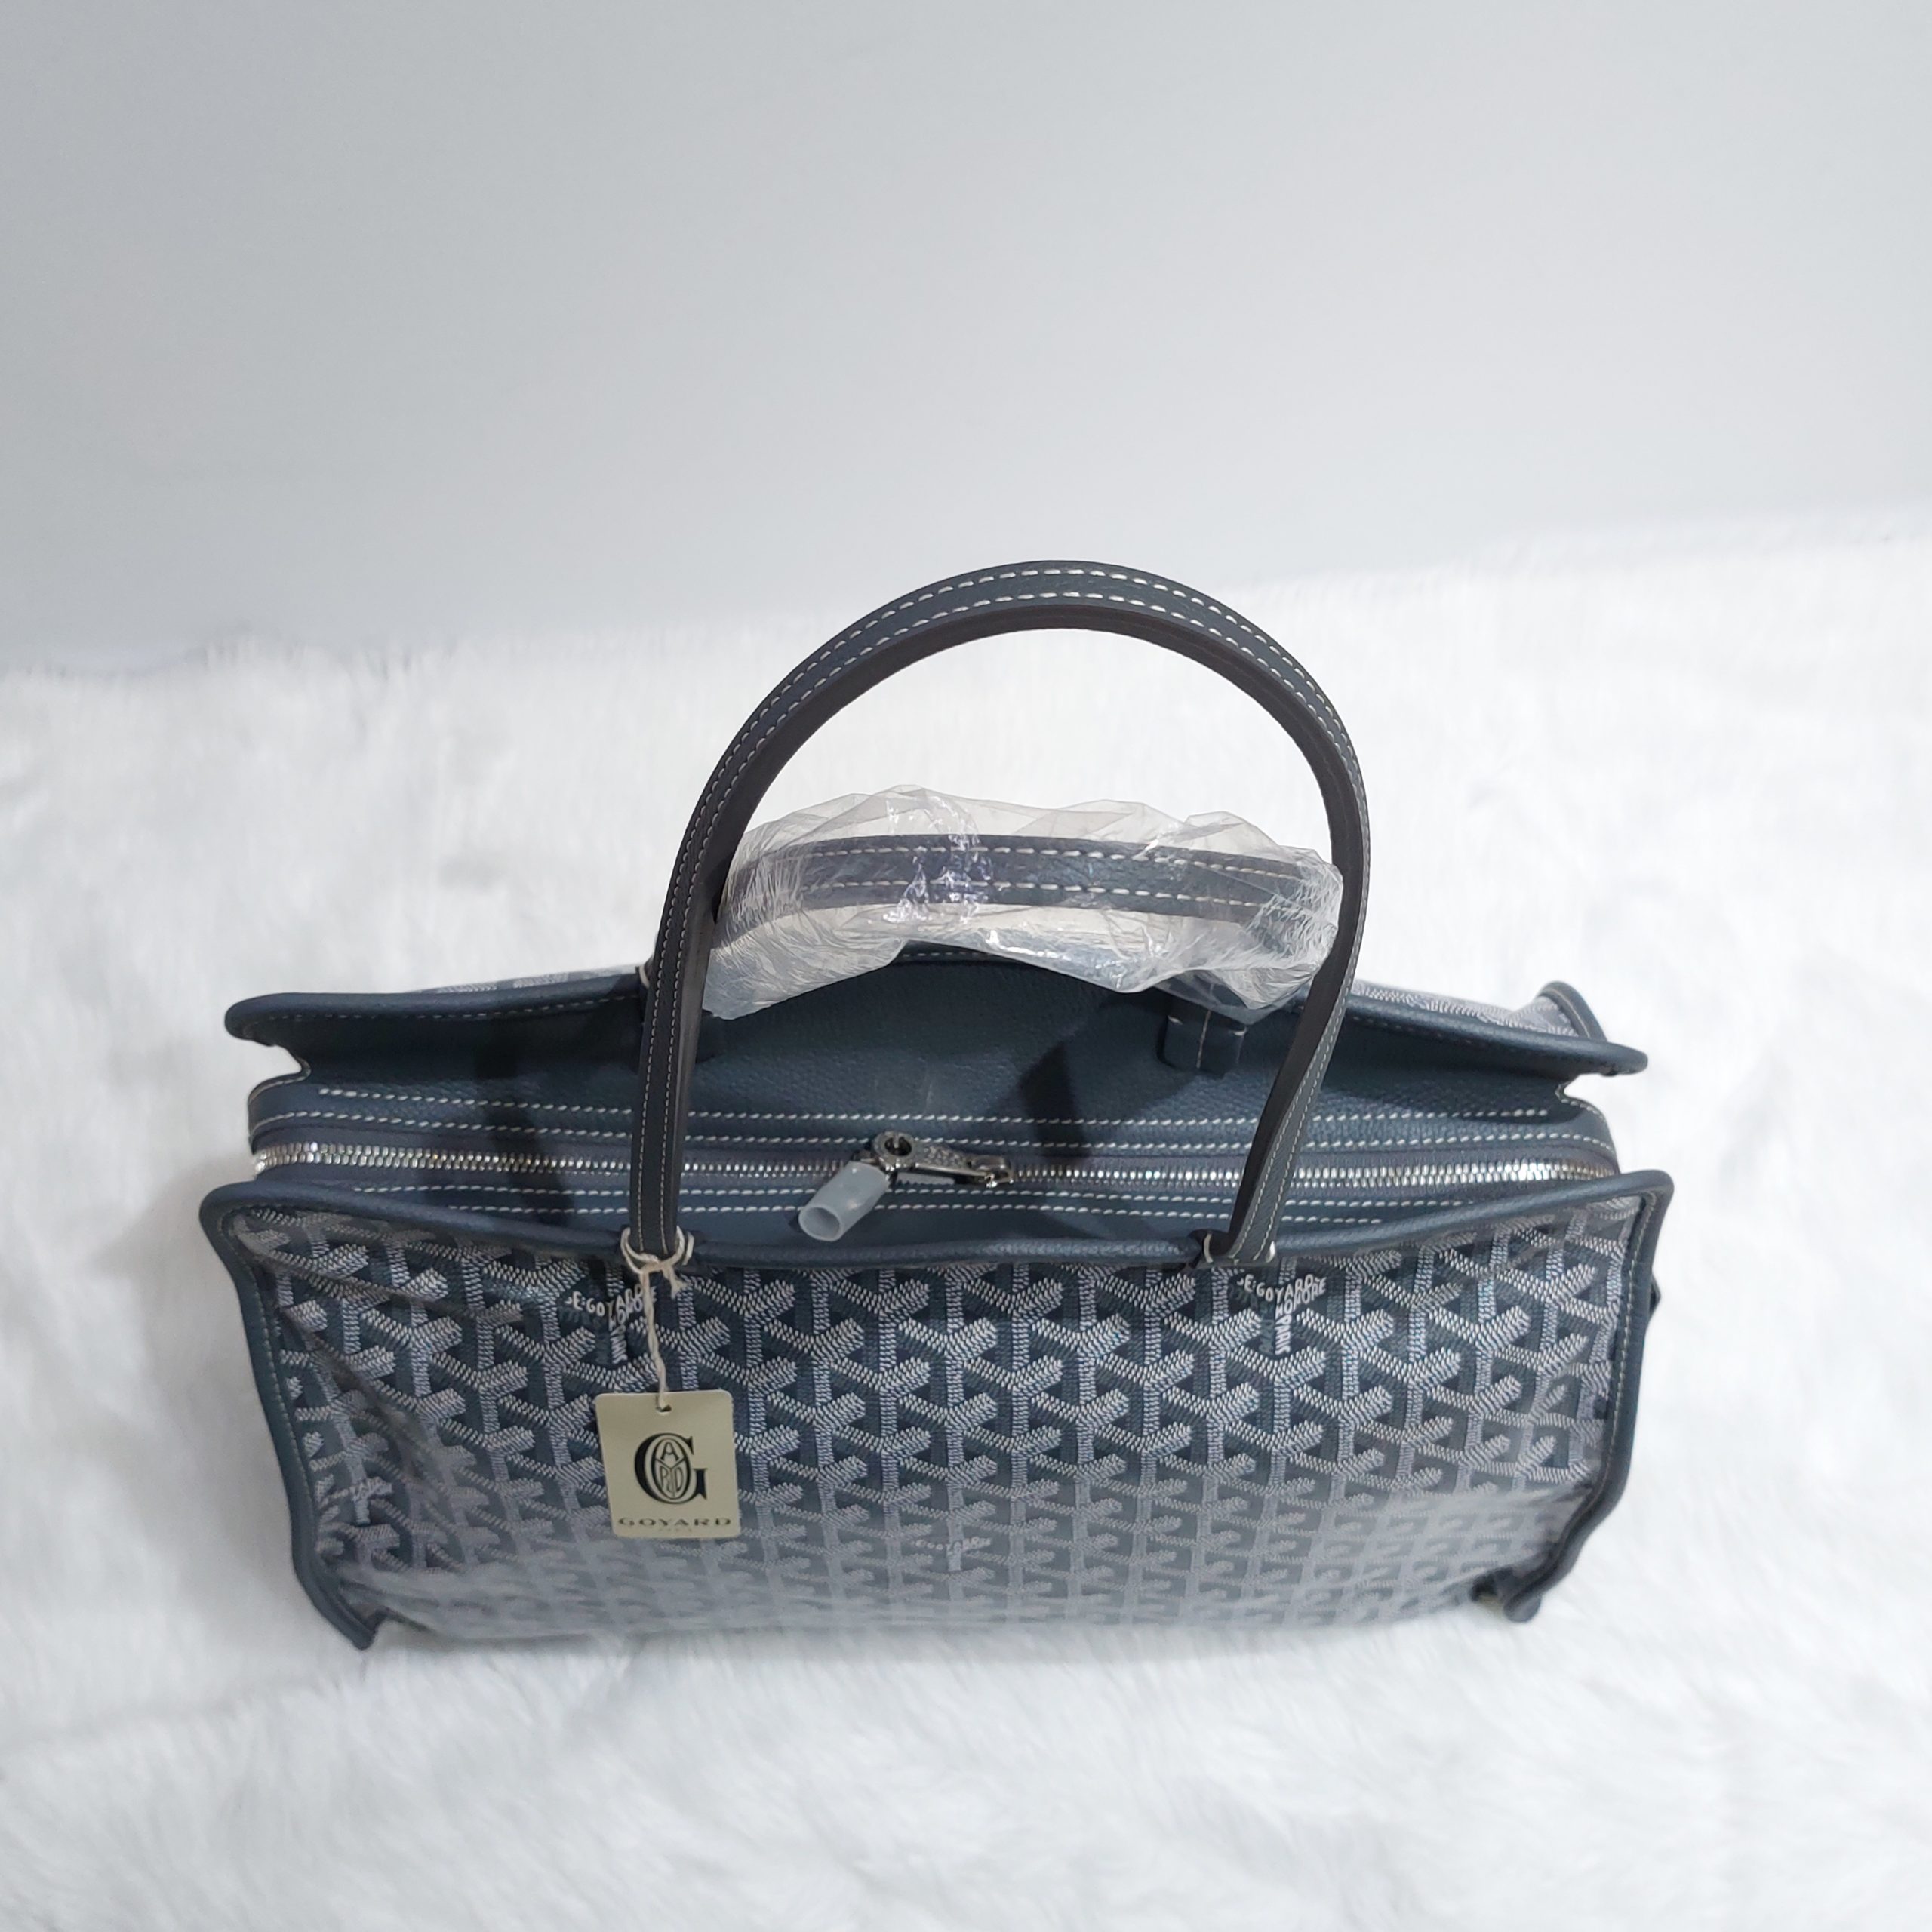 Shop GOYARD Hardy PM Bag by mimiparfait